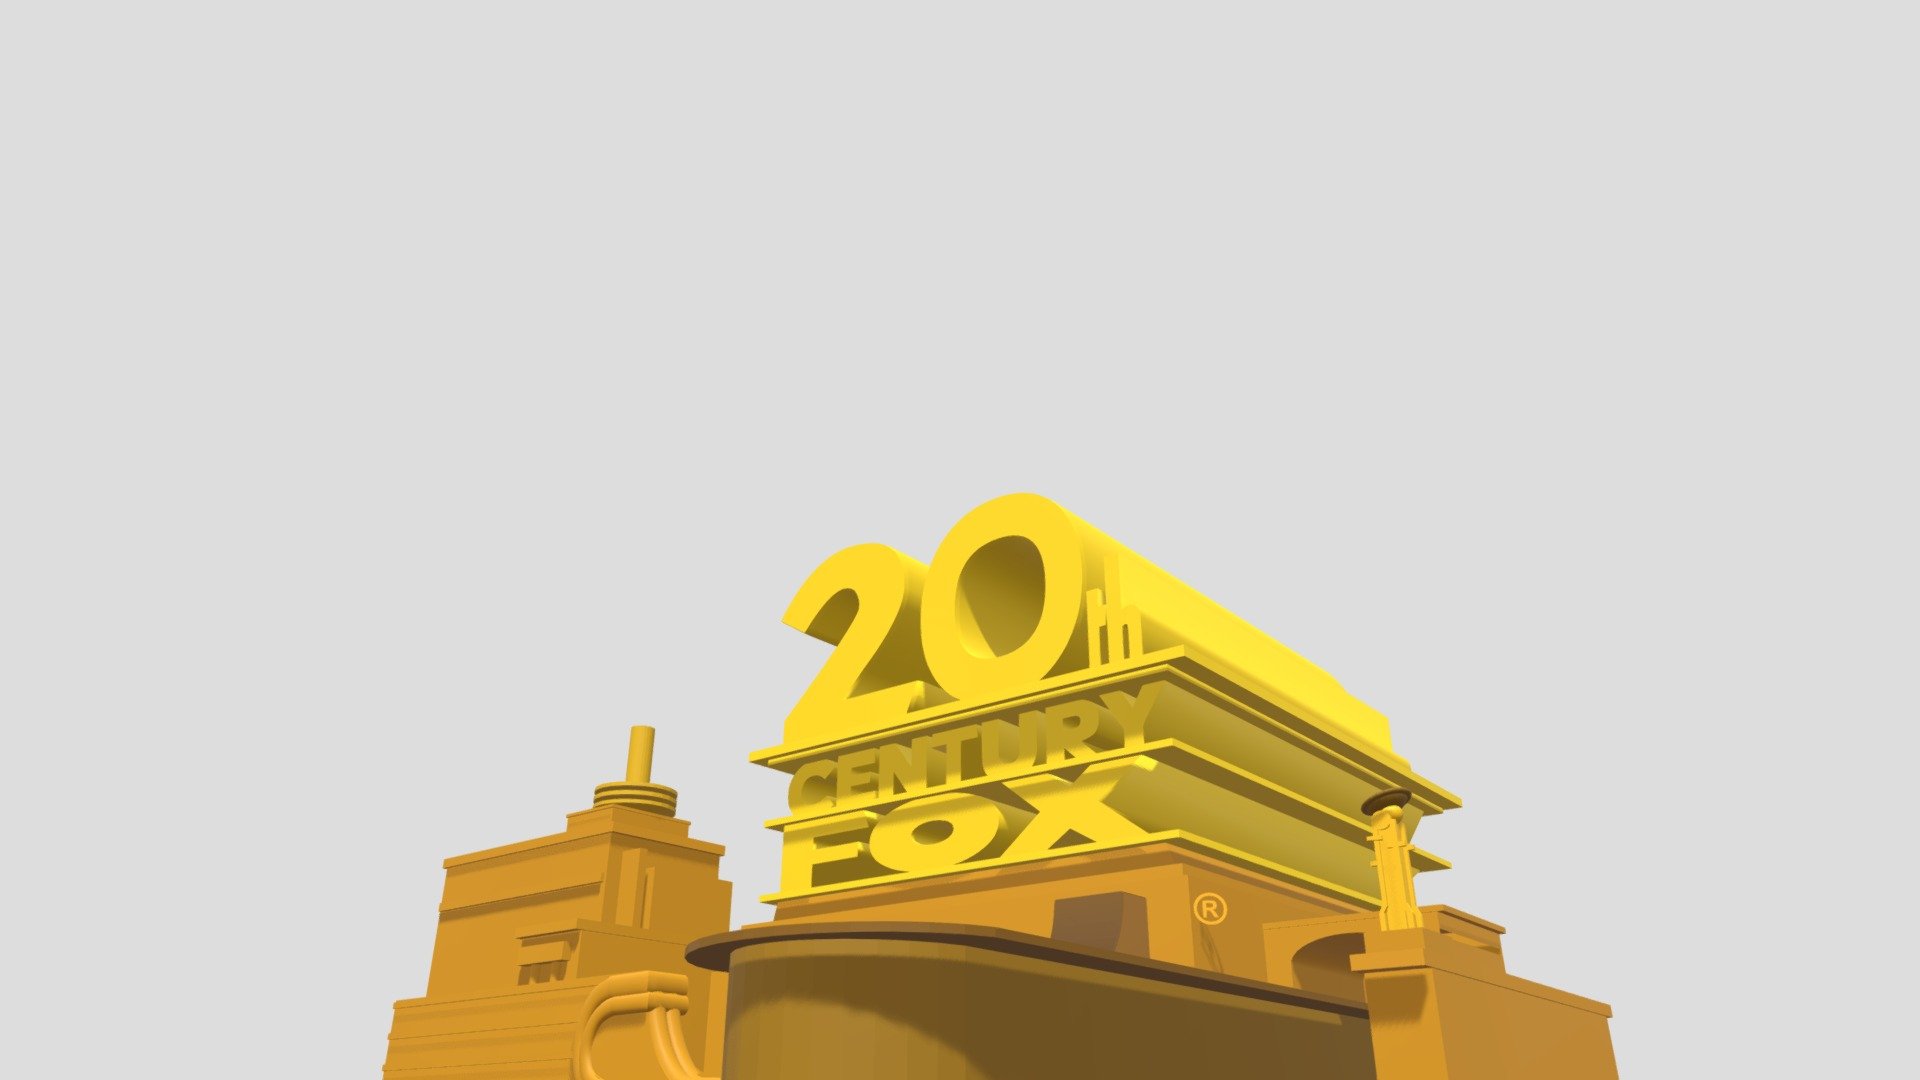 20th Century Fox Logo (1981)